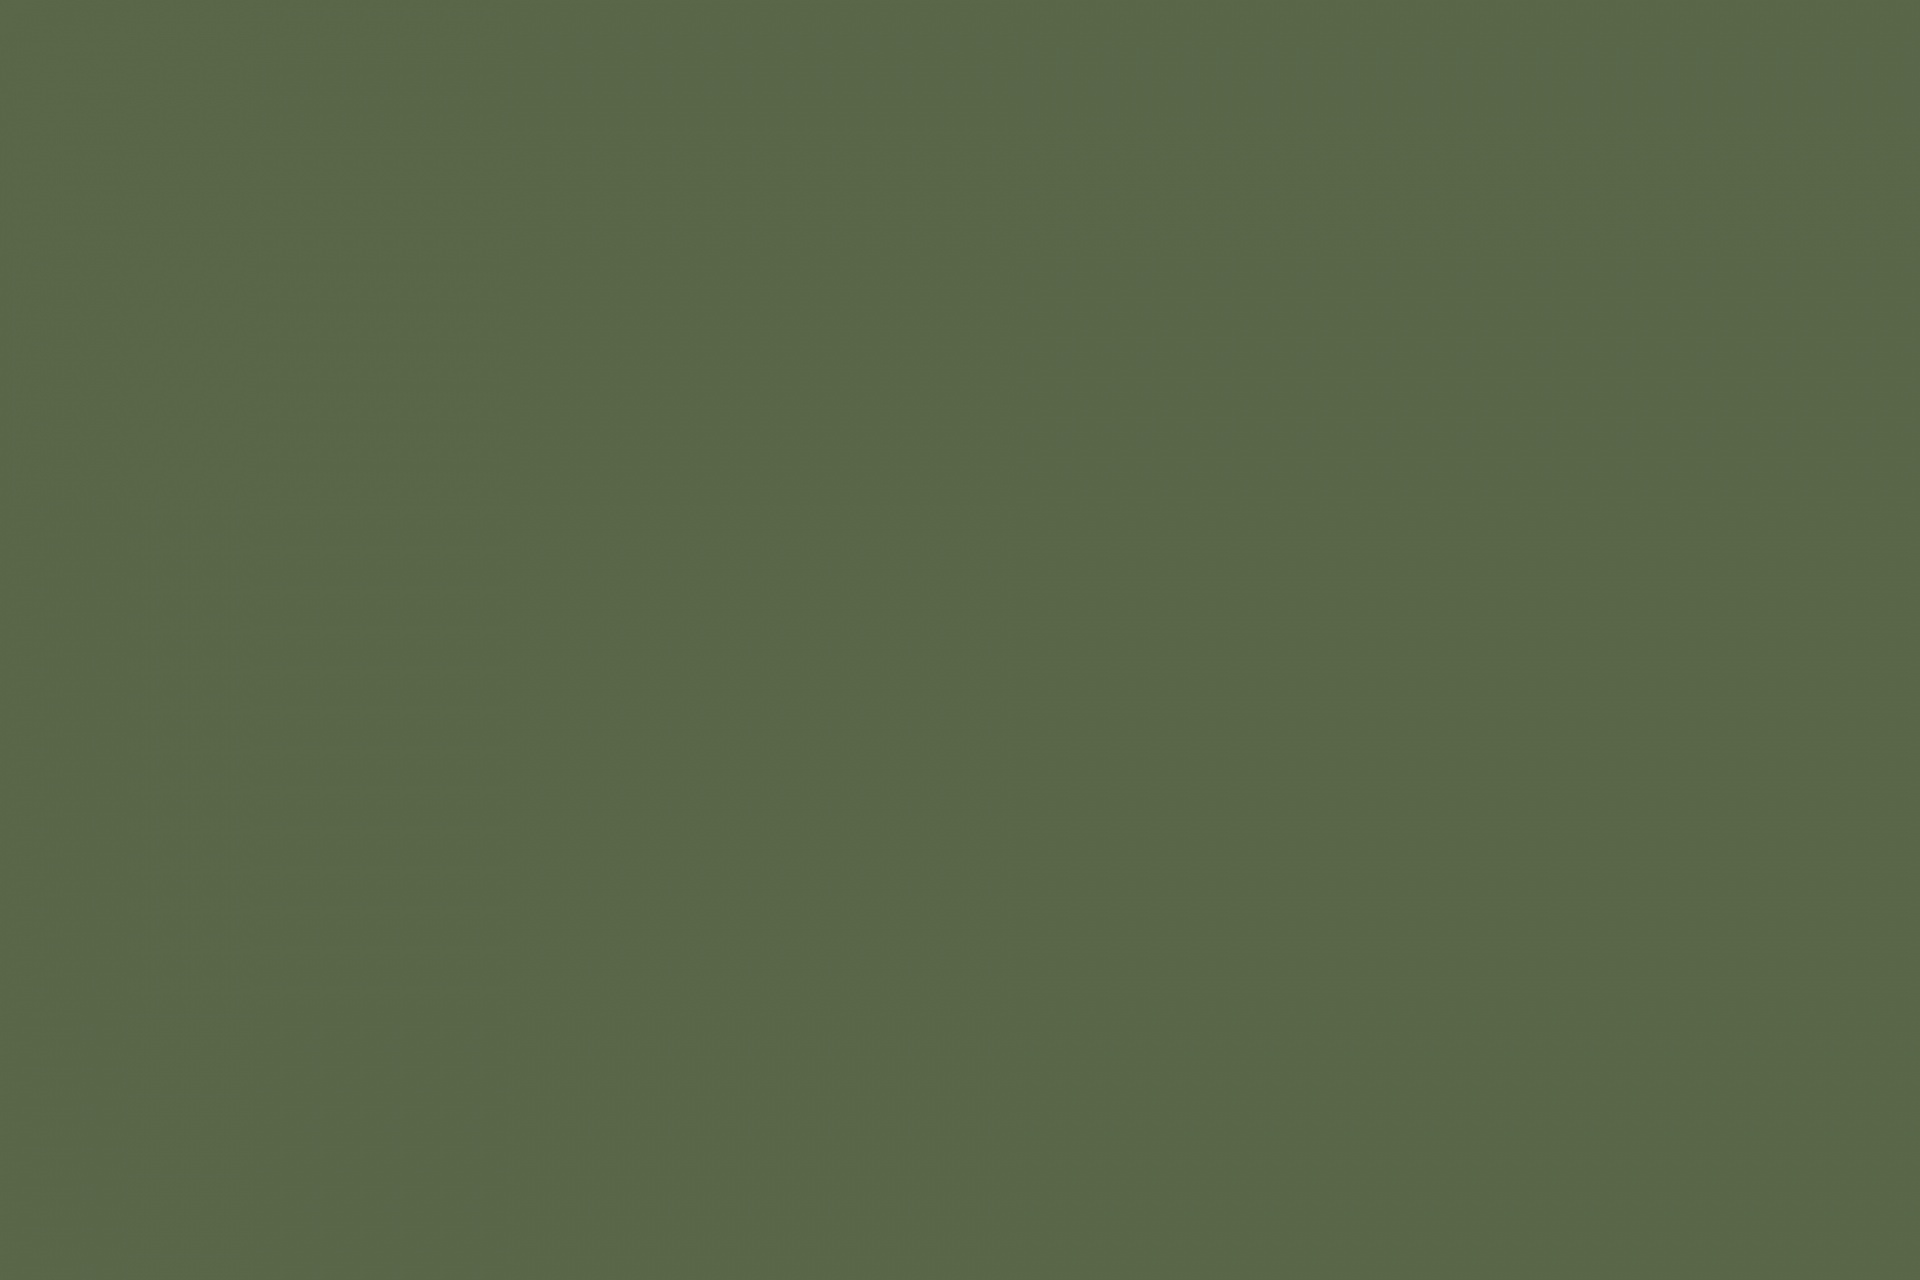 olive green wallpaper,green,brown,grass,font,pattern